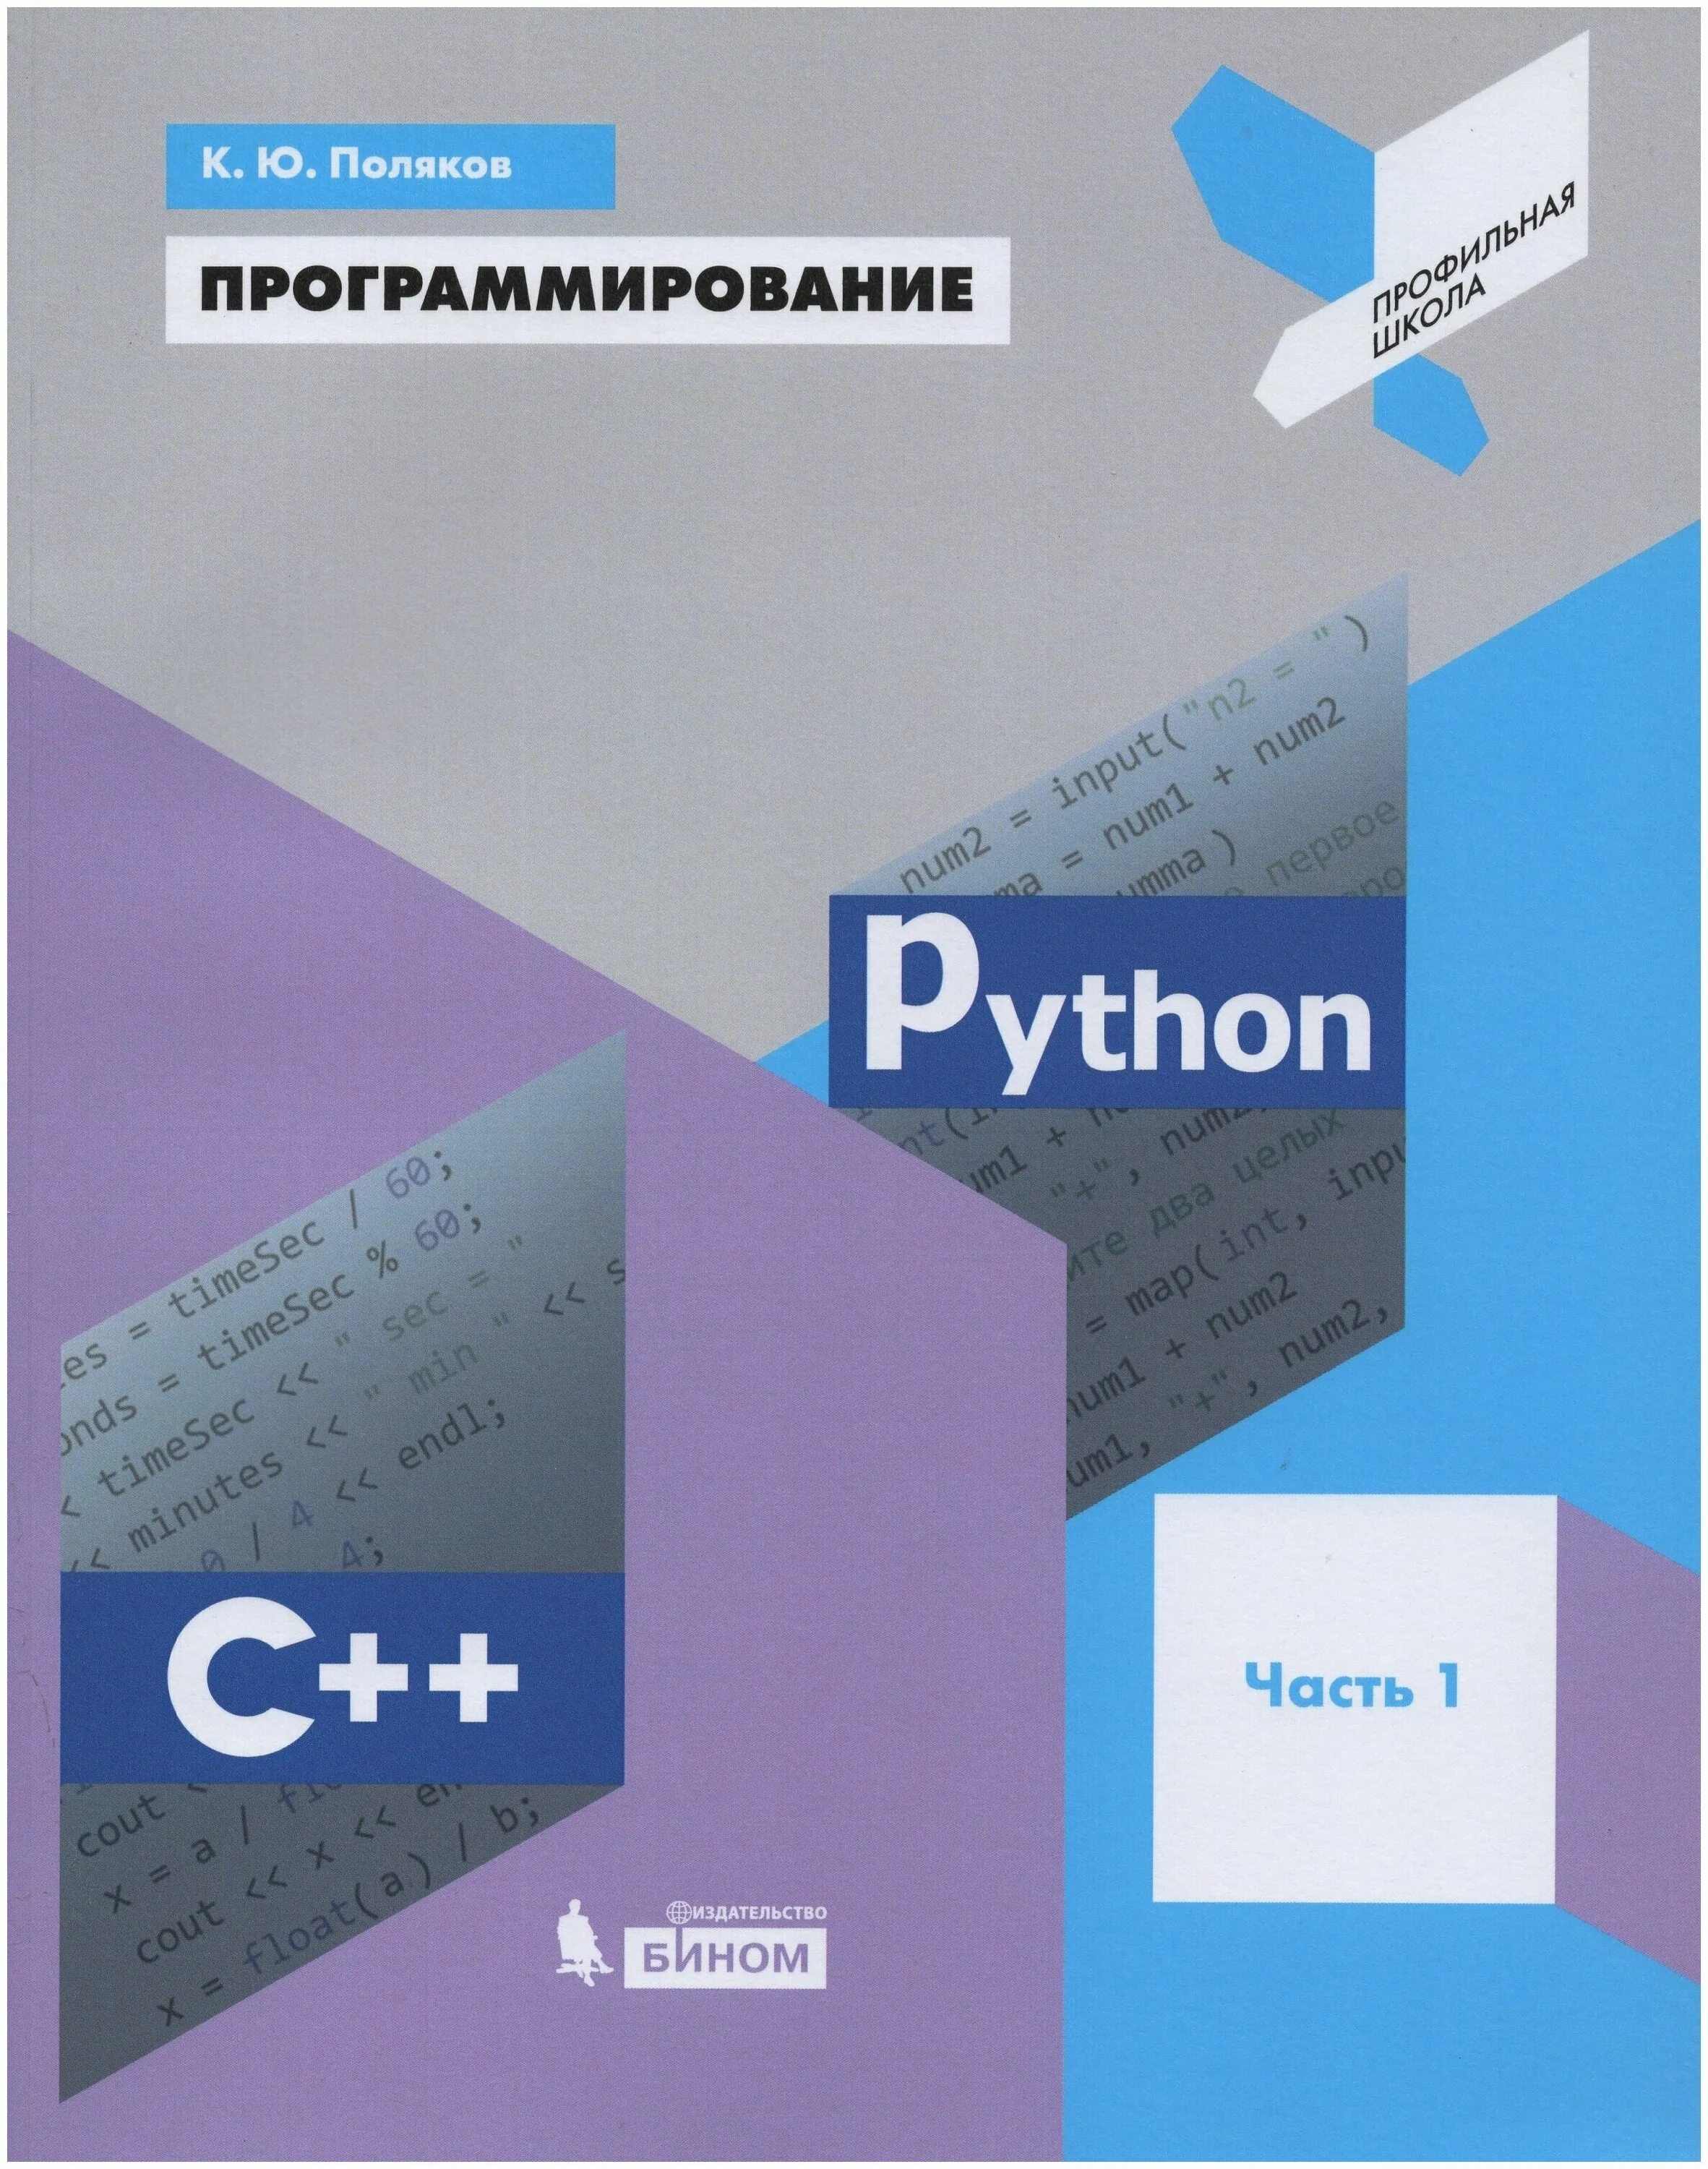 Программирование на python босова 8 класс. Книга Python программирование к.ю. Поляков программирование. Поляков учебник программирование. Поляков программирование Python.